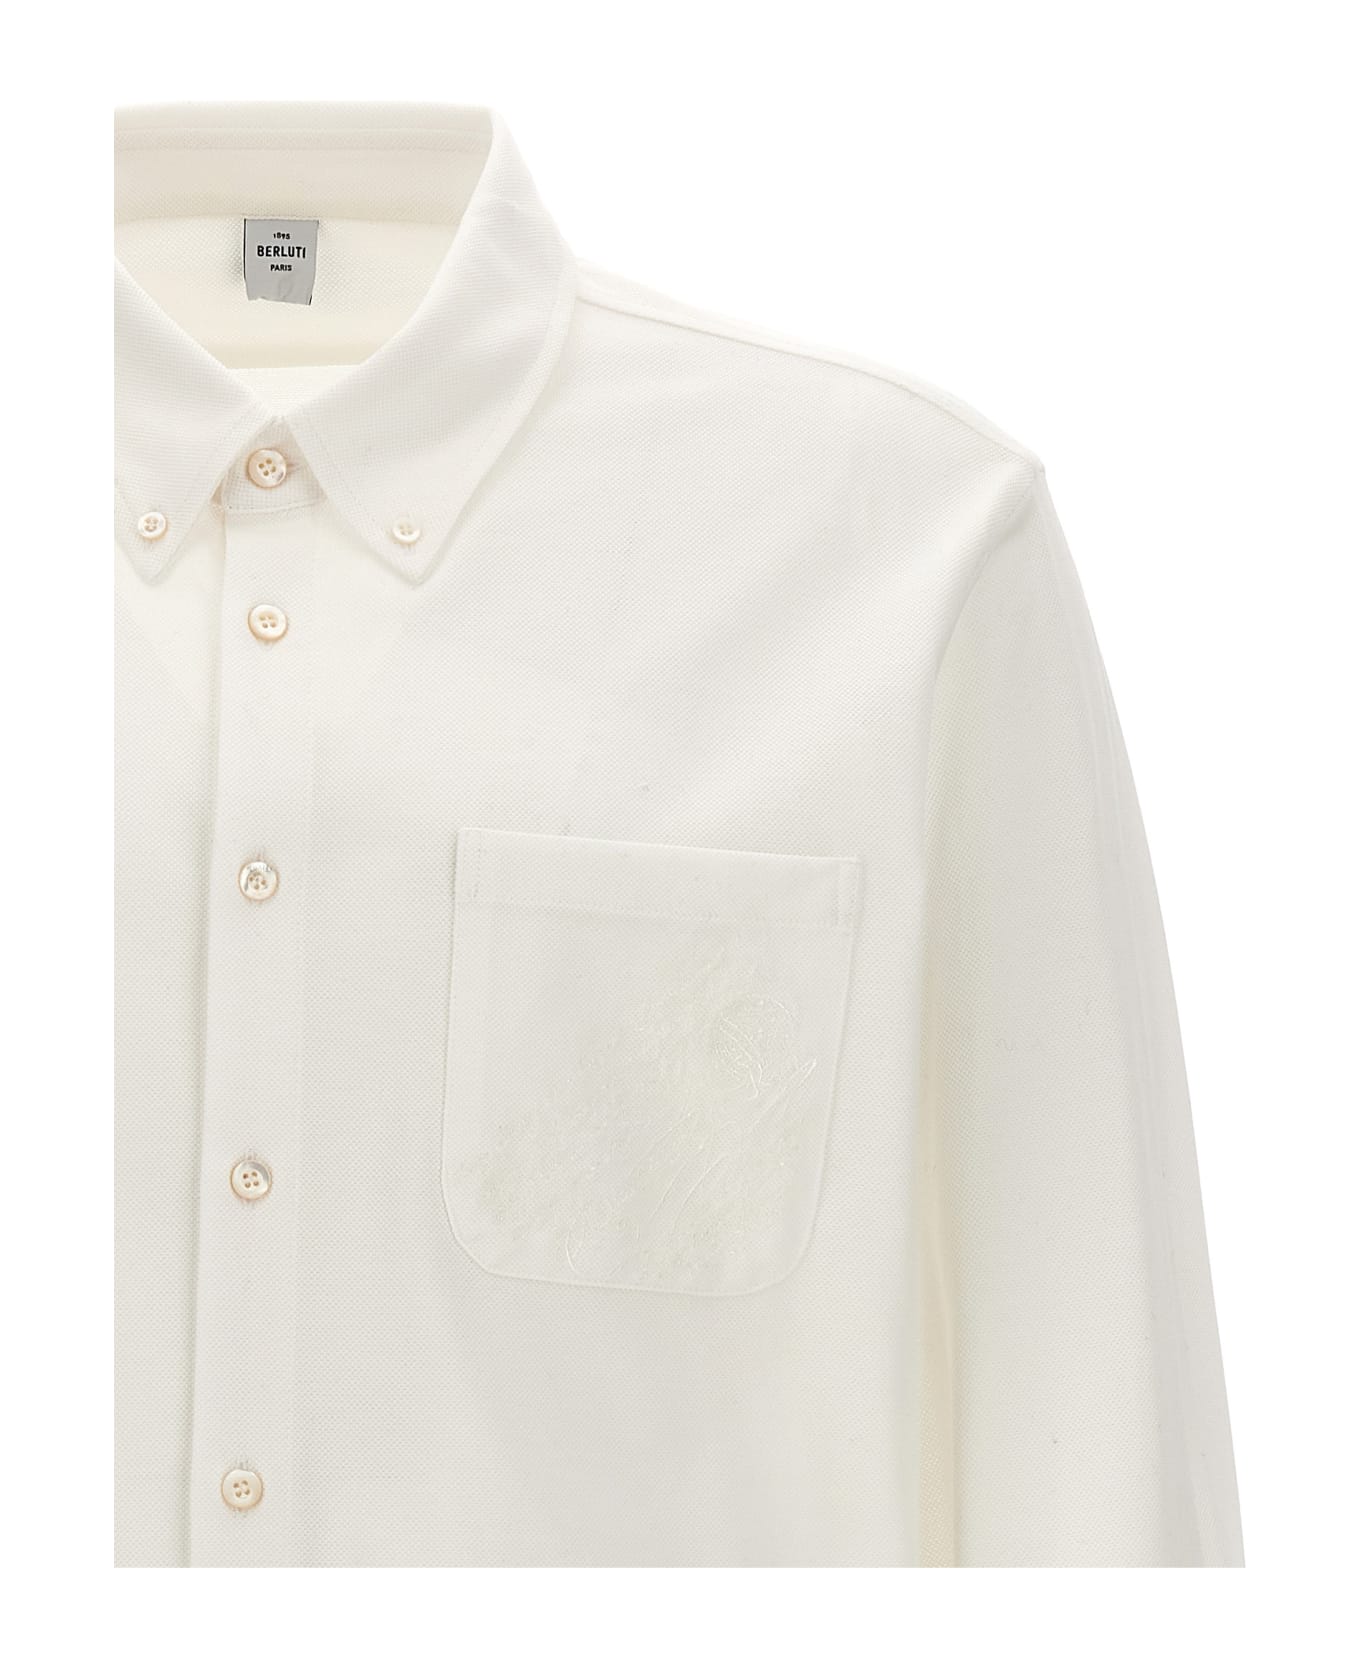 Berluti 'scritto Pocket' Shirt - White